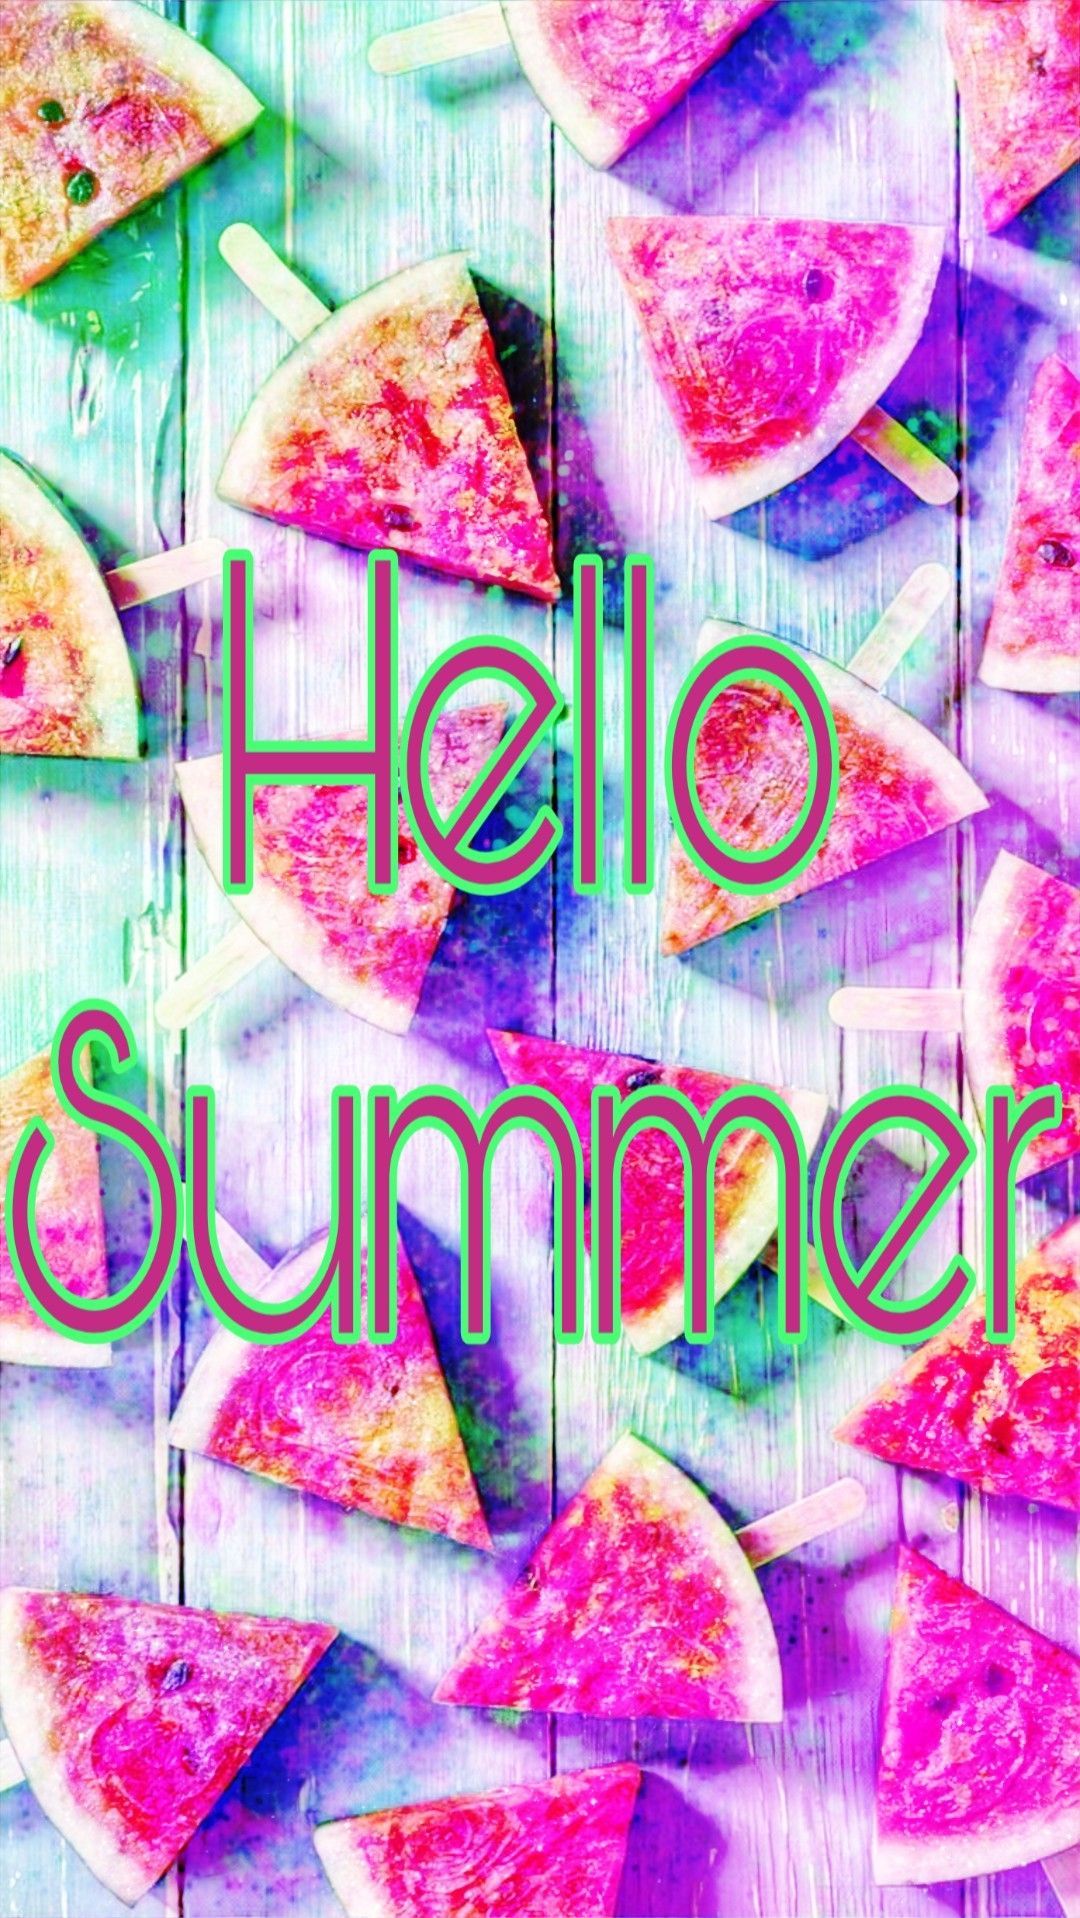 Watermelon Pops Galaxy, made by me #pops #watermelon #summer #hellosummer # fruit #fruity #popsicles #wallpaper #backg. Hello summer, Wallpaper s, Watermelon pops